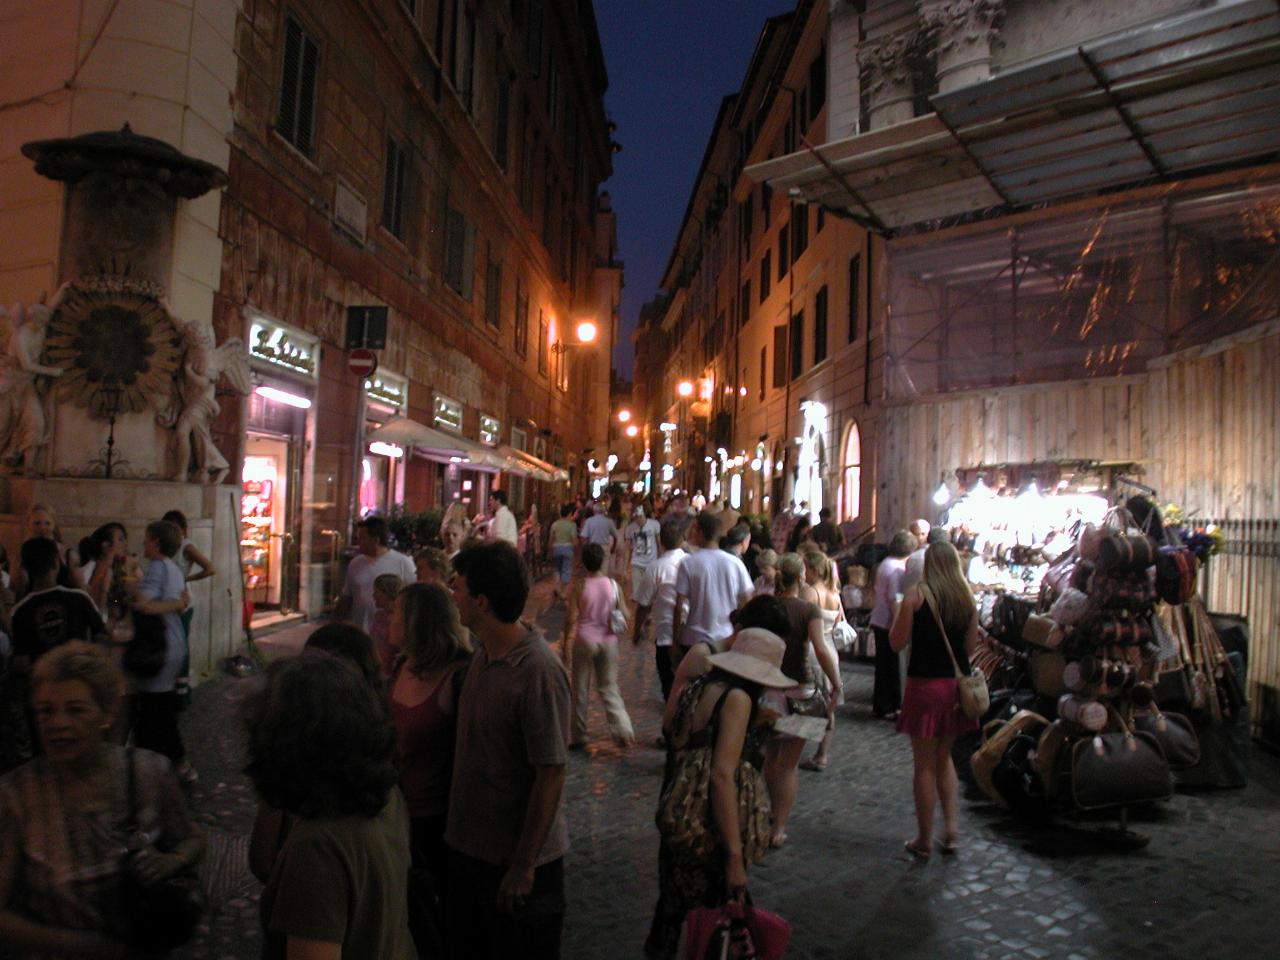 Street scene near Trevi Fountain